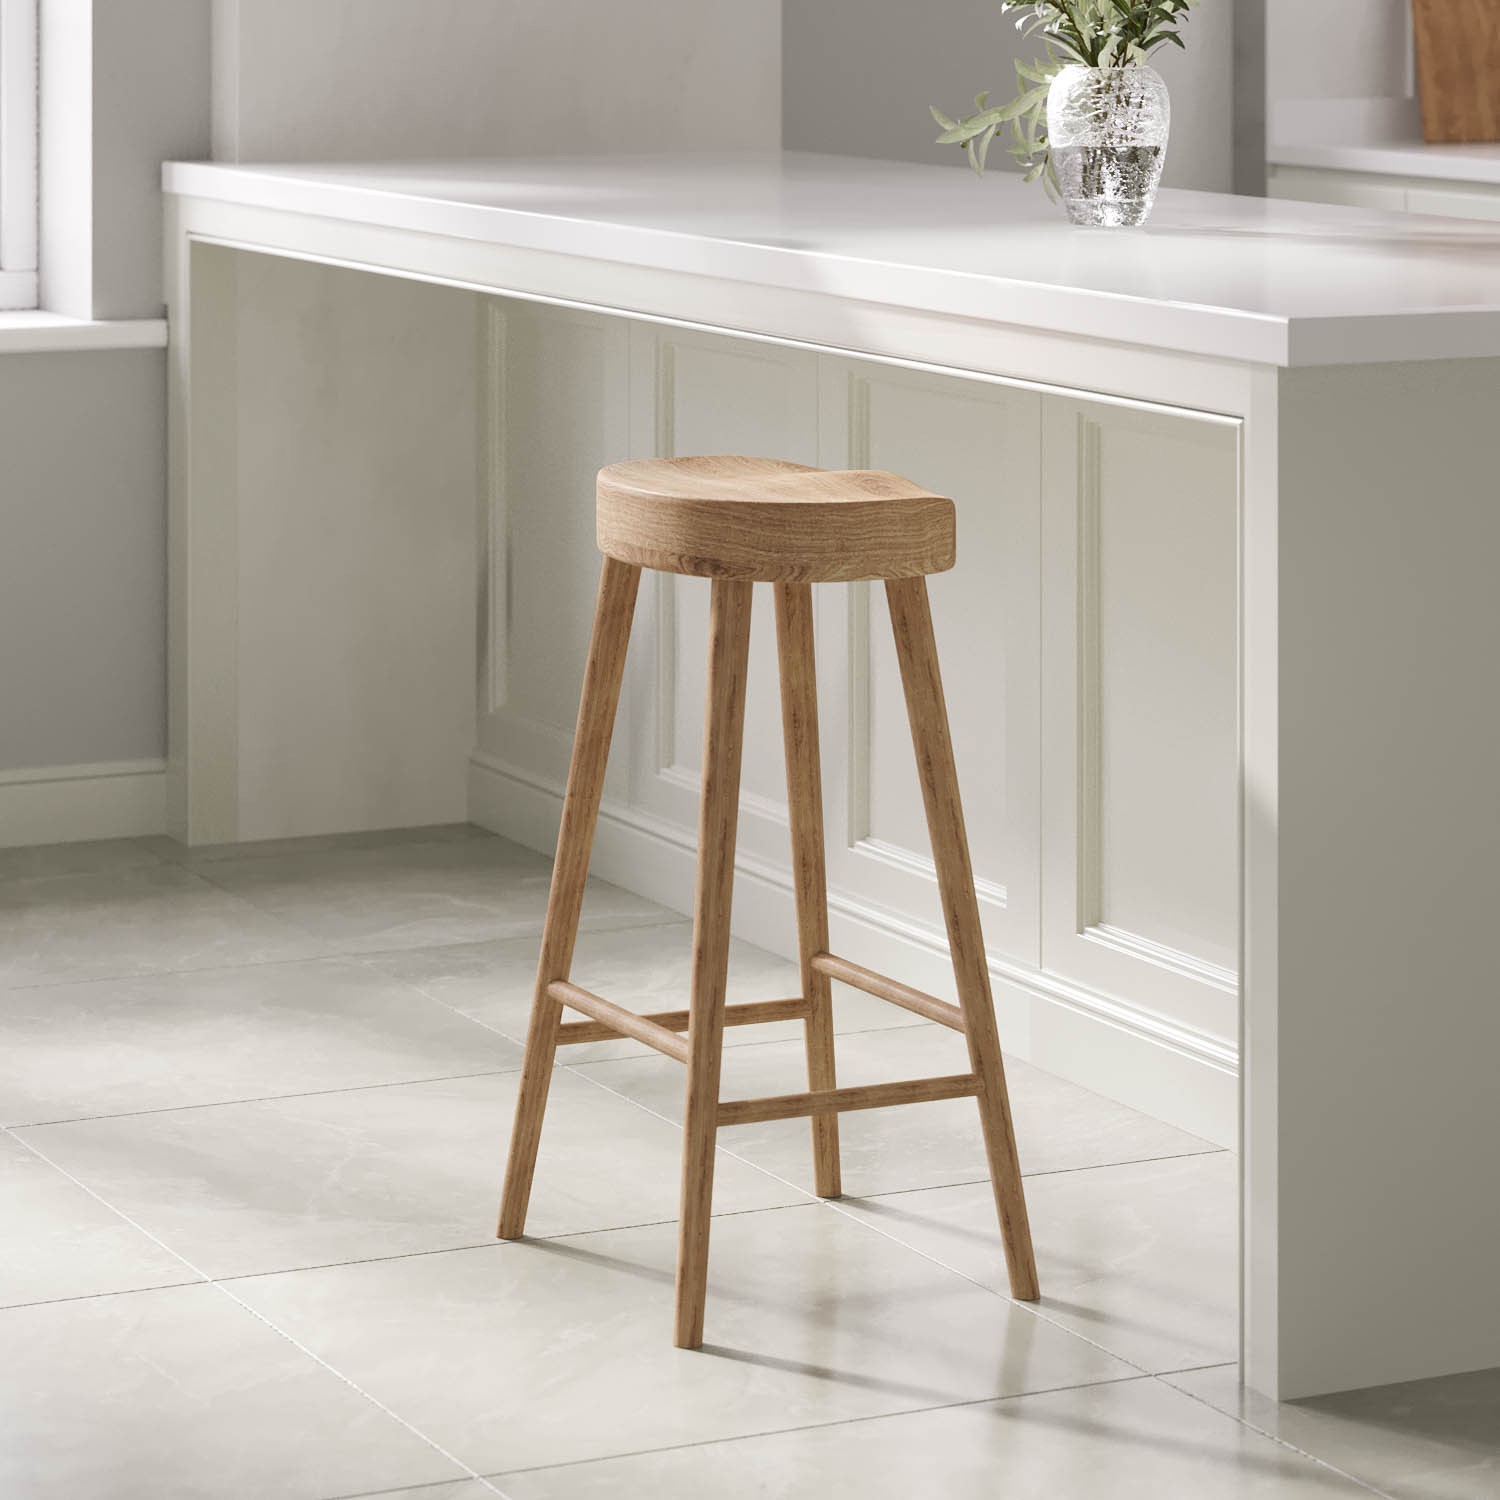 Photo of Solid oak kitchen stool - 70cm - rayne